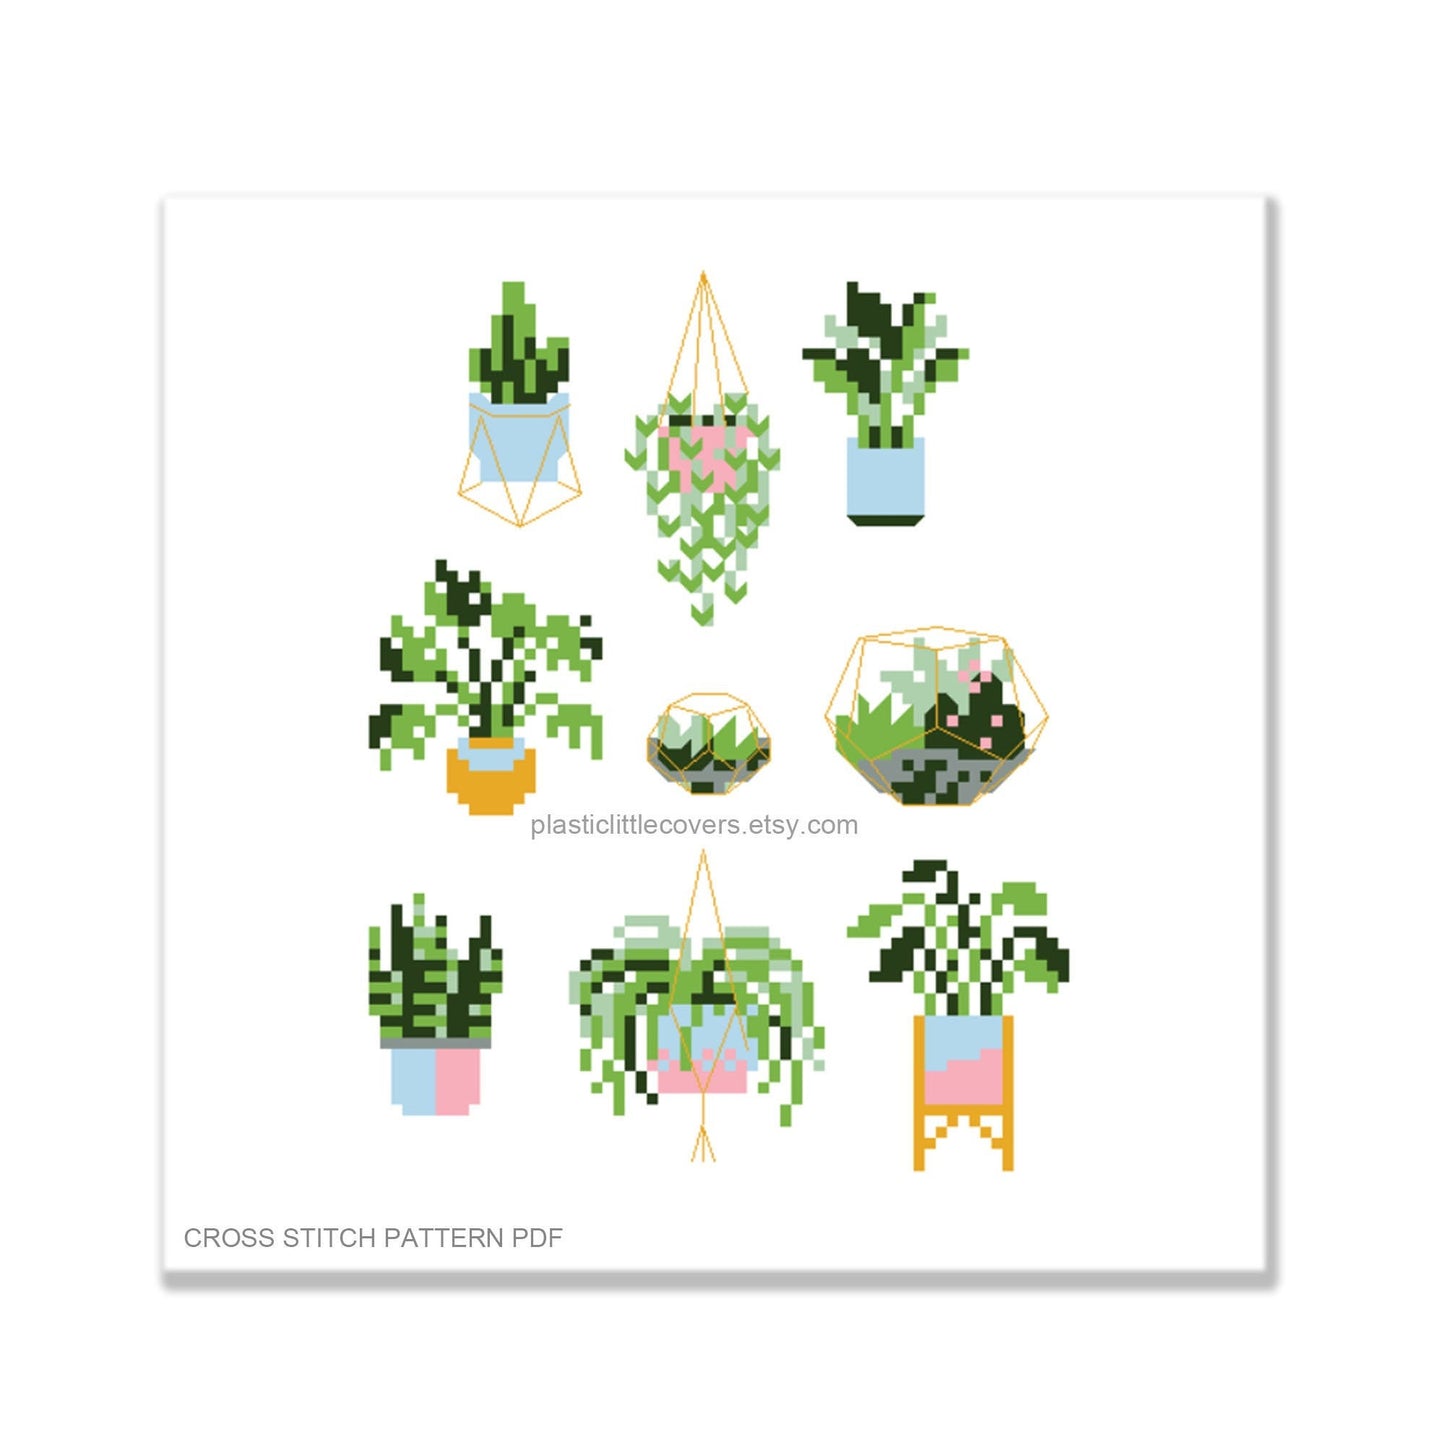 Plant Pals - Cross Stitch Pattern PDF.